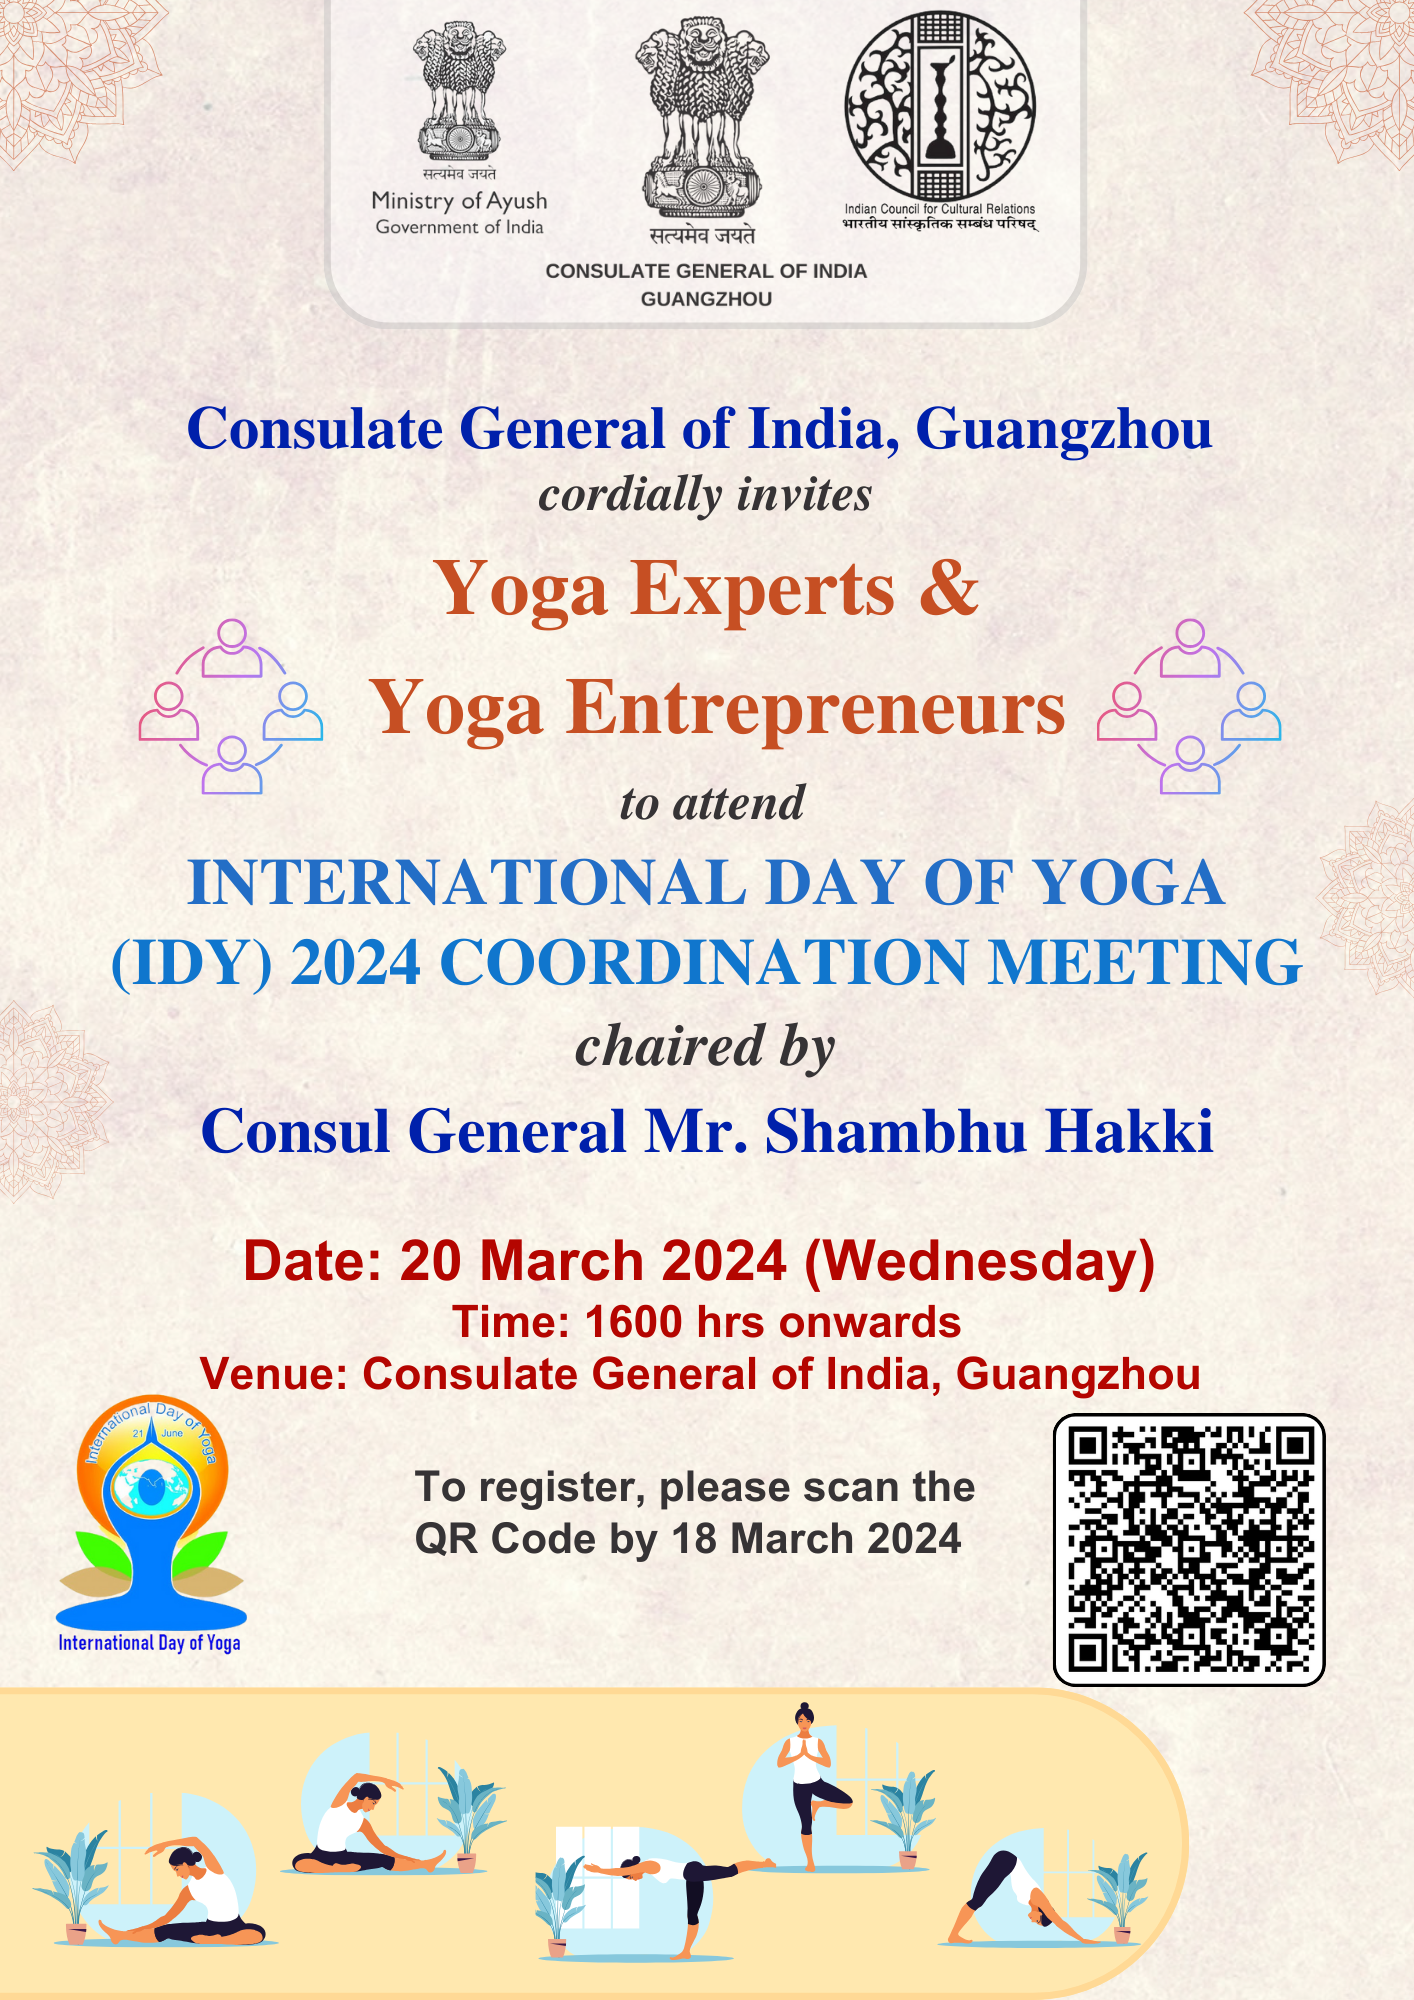 International Day of Yoga 2024 Coordination Meeting for Yoga Experts, Yoga Entrepreneurs, Owners of Yoga Studios